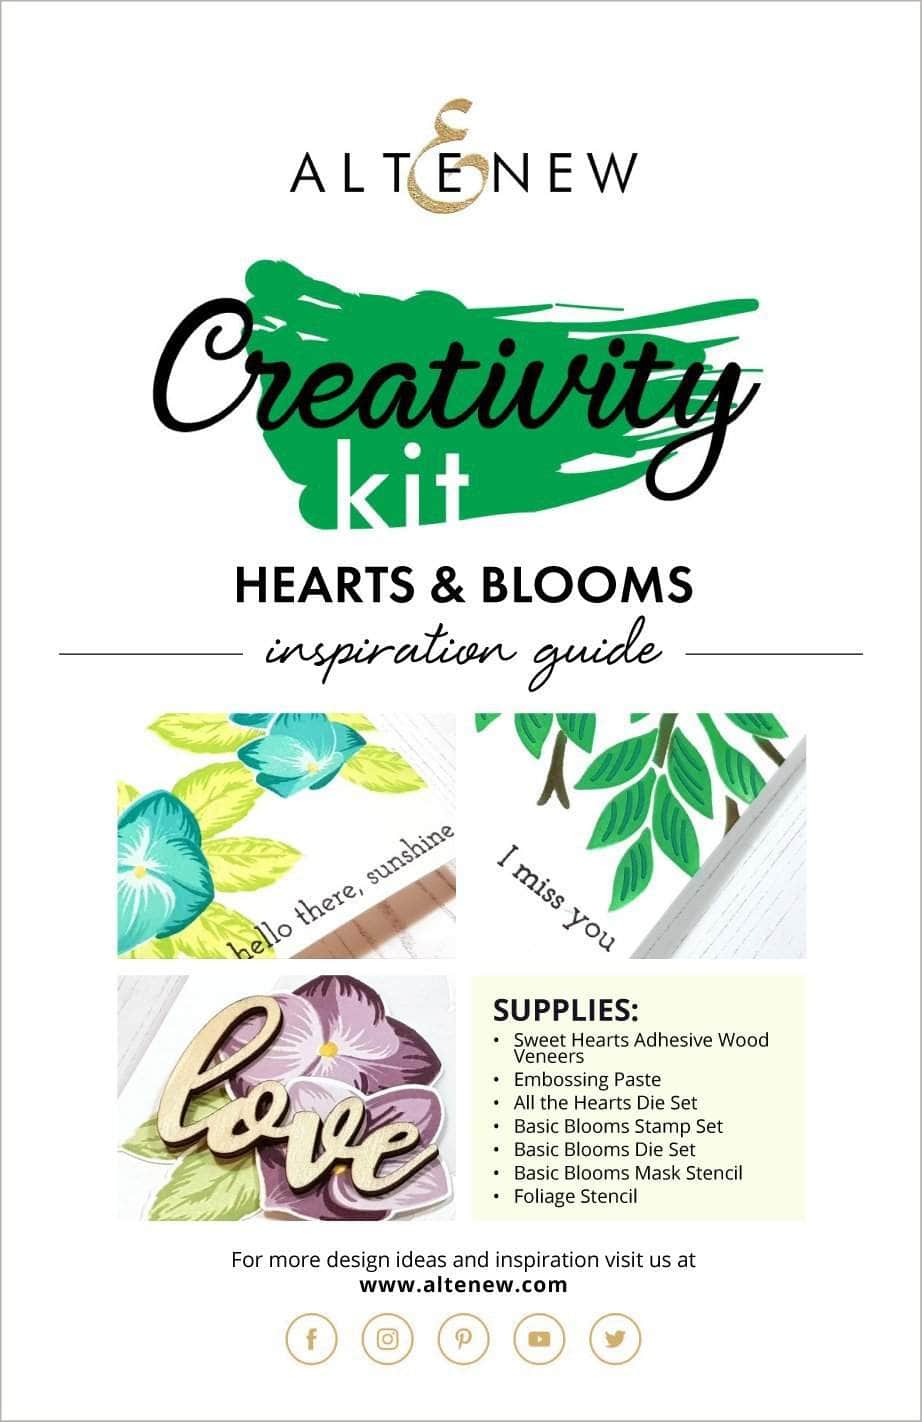 55Printing.com Printed Media Hearts & Blooms Creativity Kit Inspiration Guide